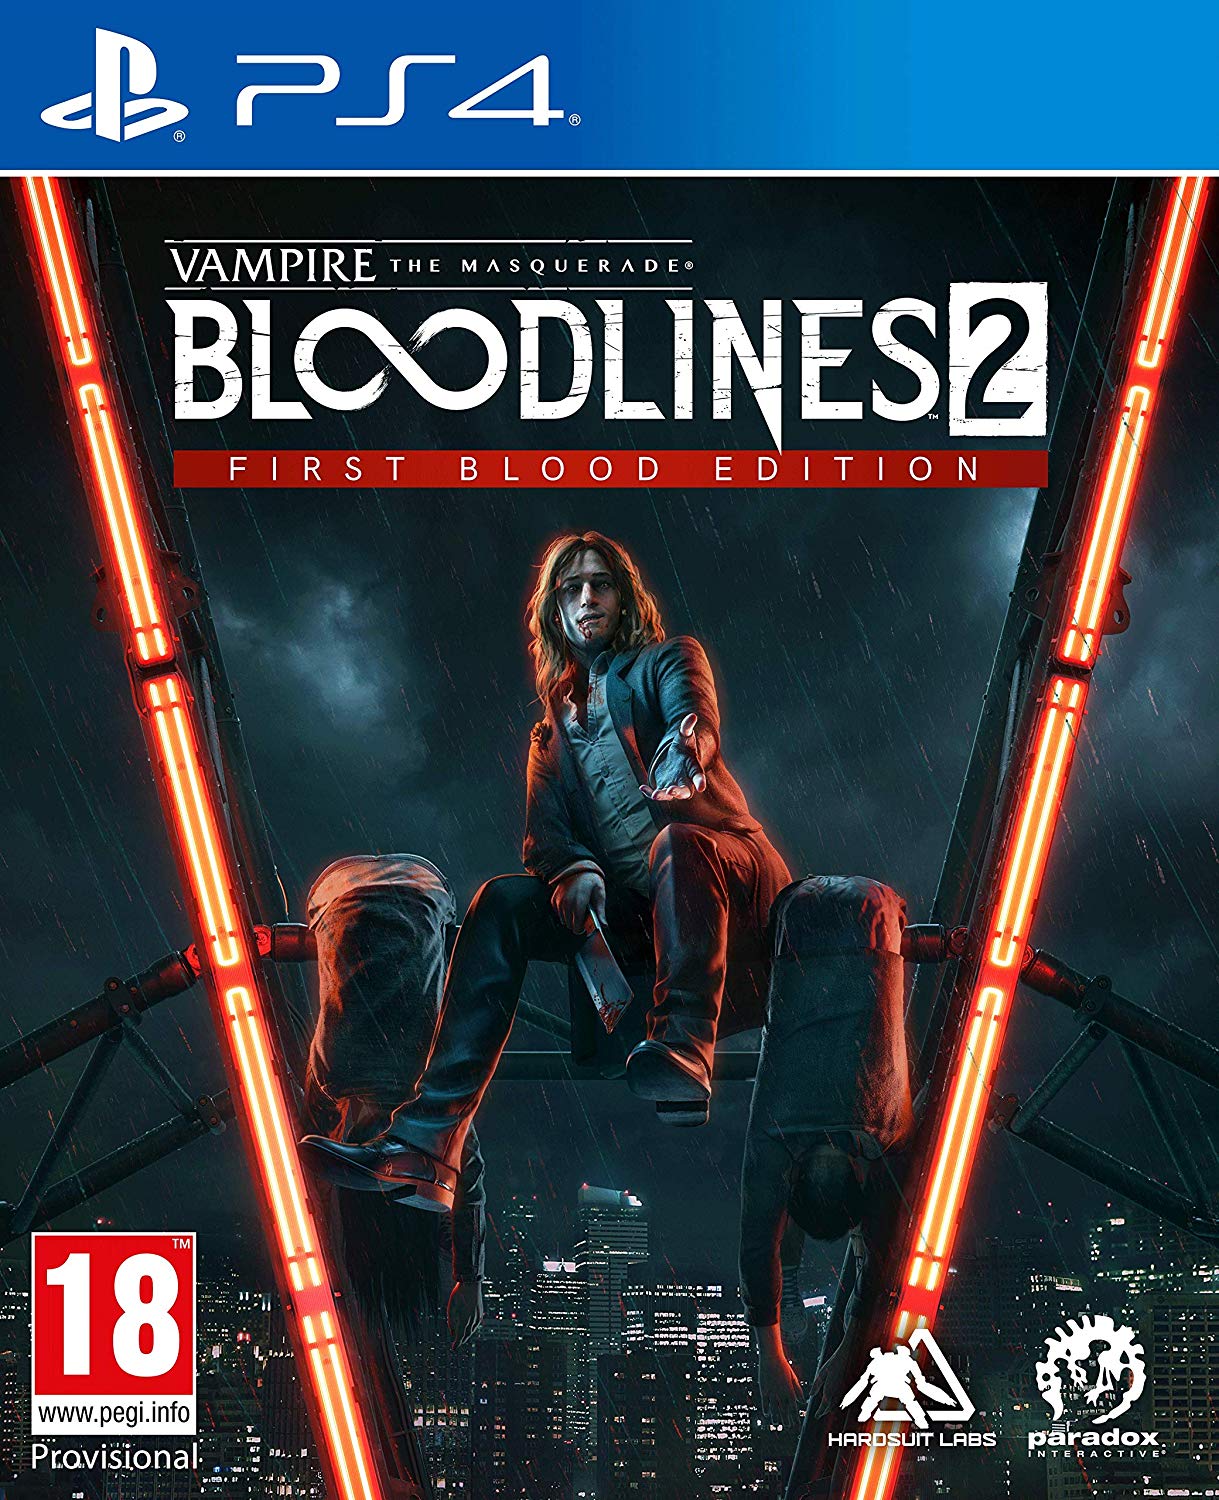 Vampire The Masquerade Bloodlines 2 First Blood Edition - PlayStation 4 Játékok